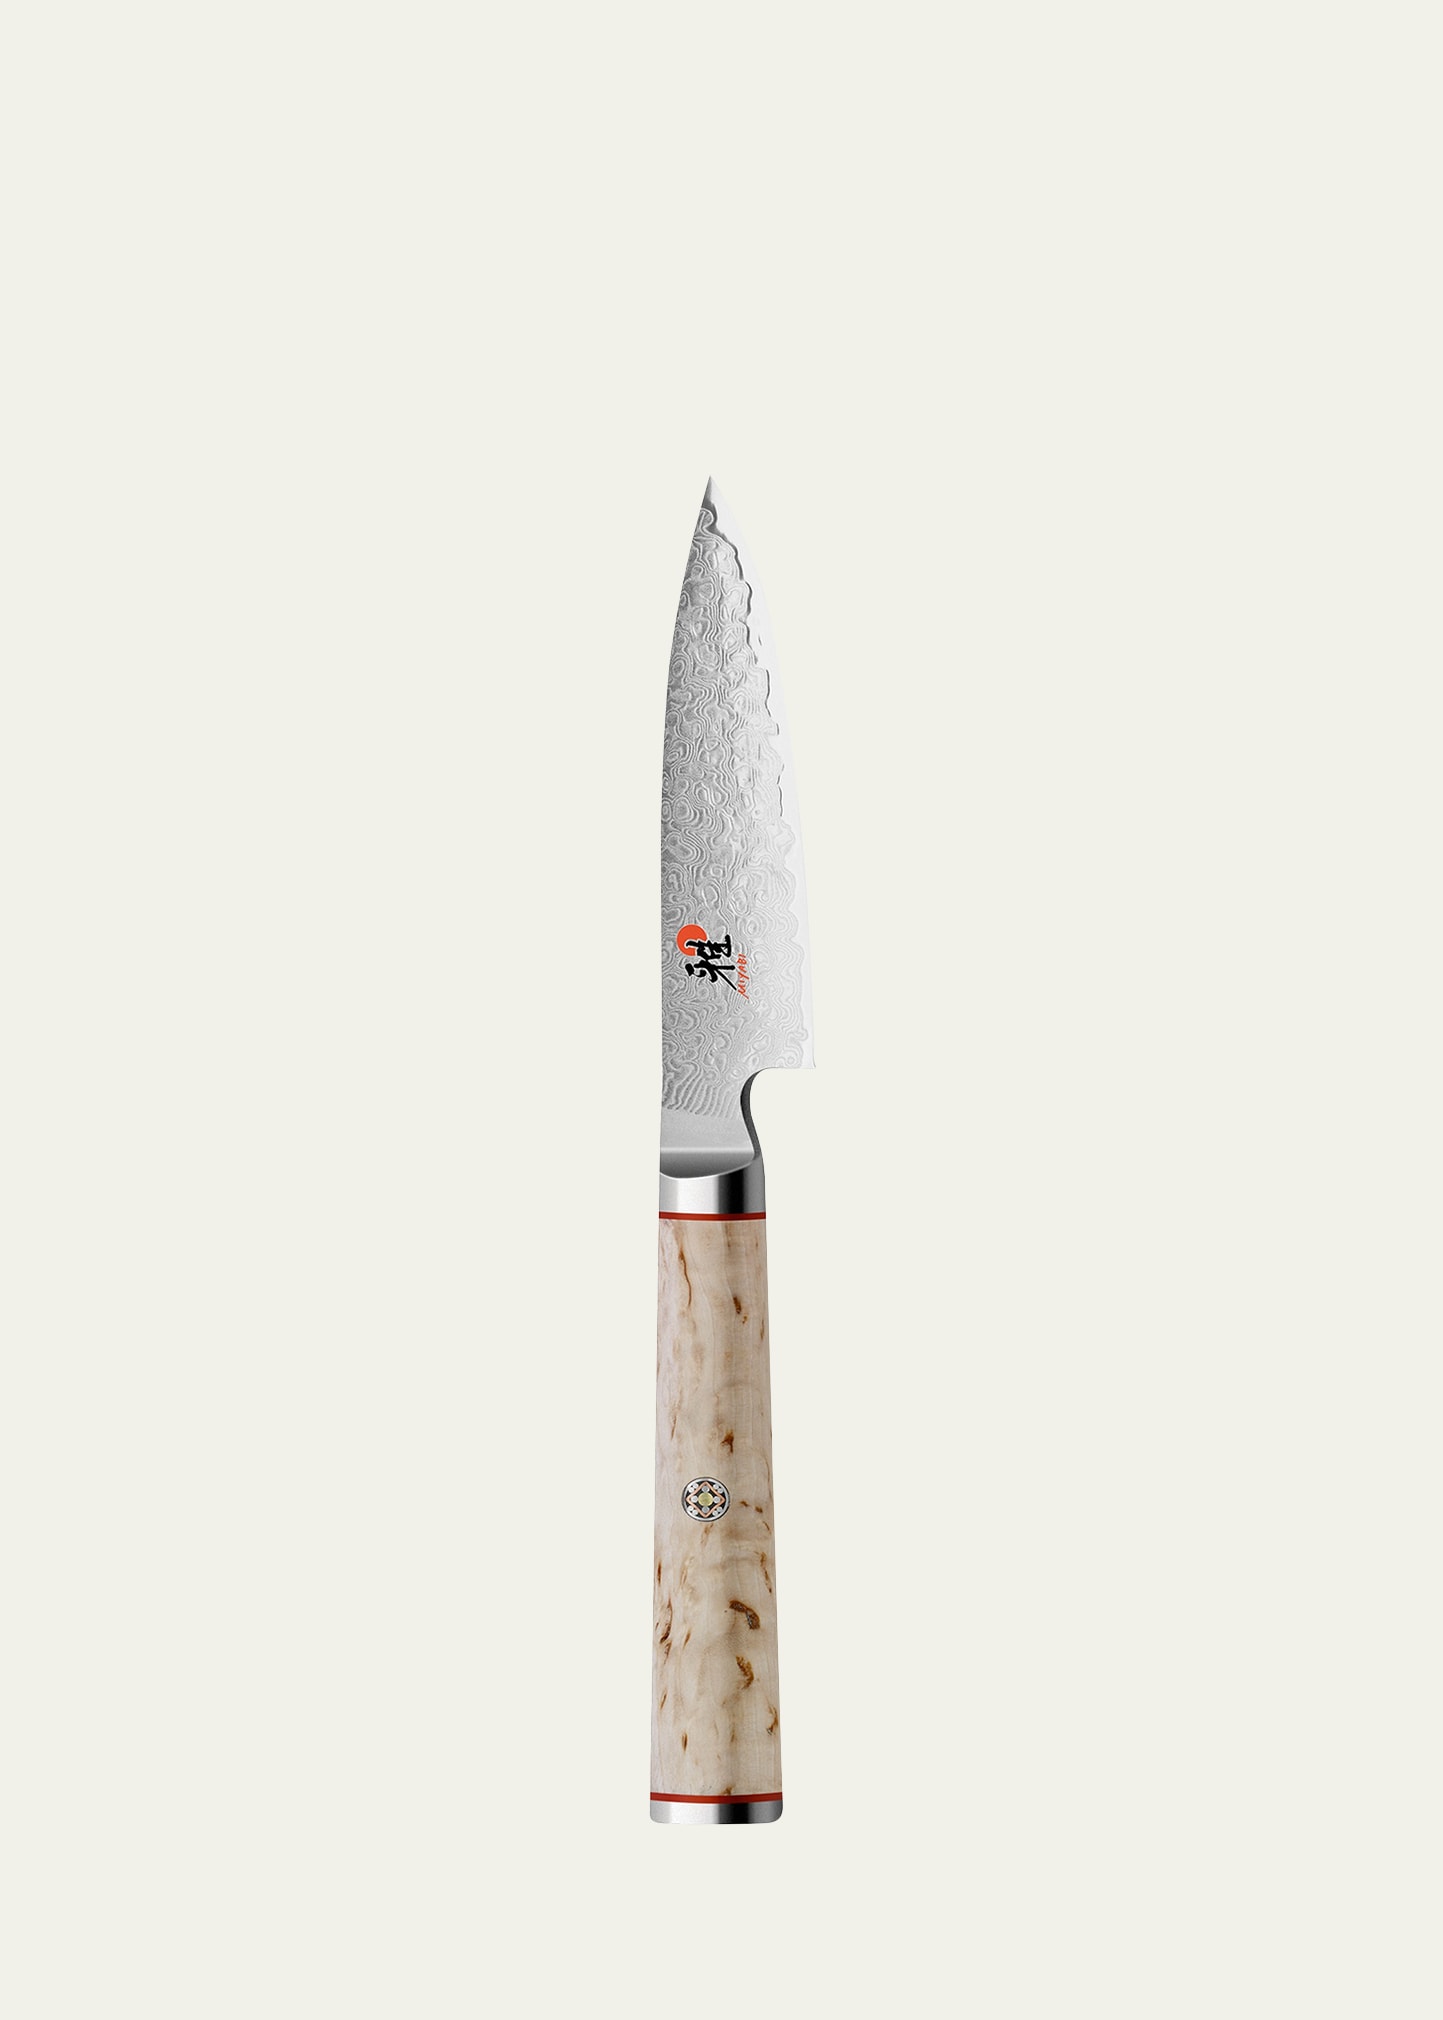 Birchwood 3.5" Paring Knife